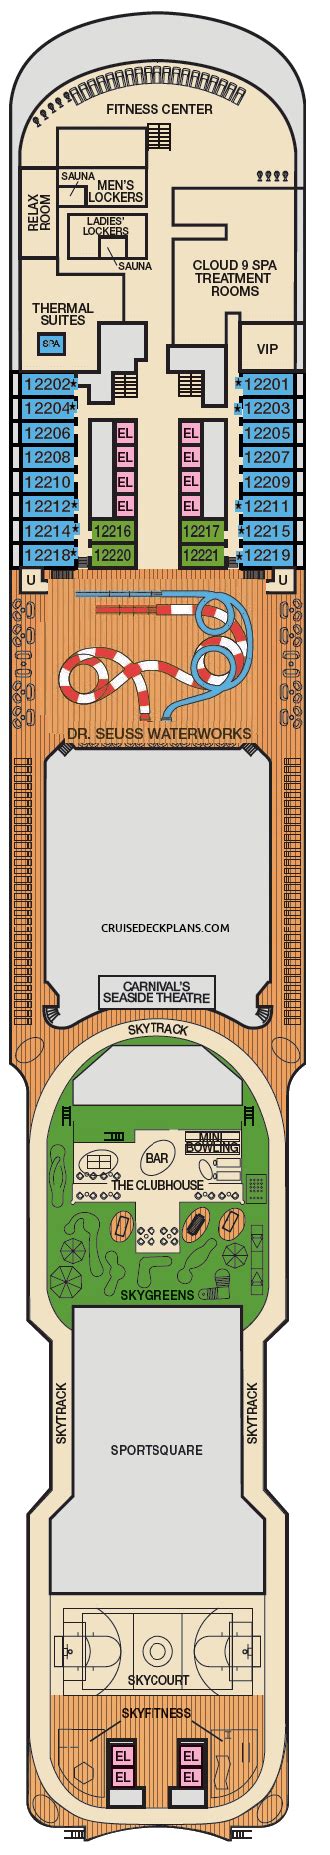 carnival horizon ship layout